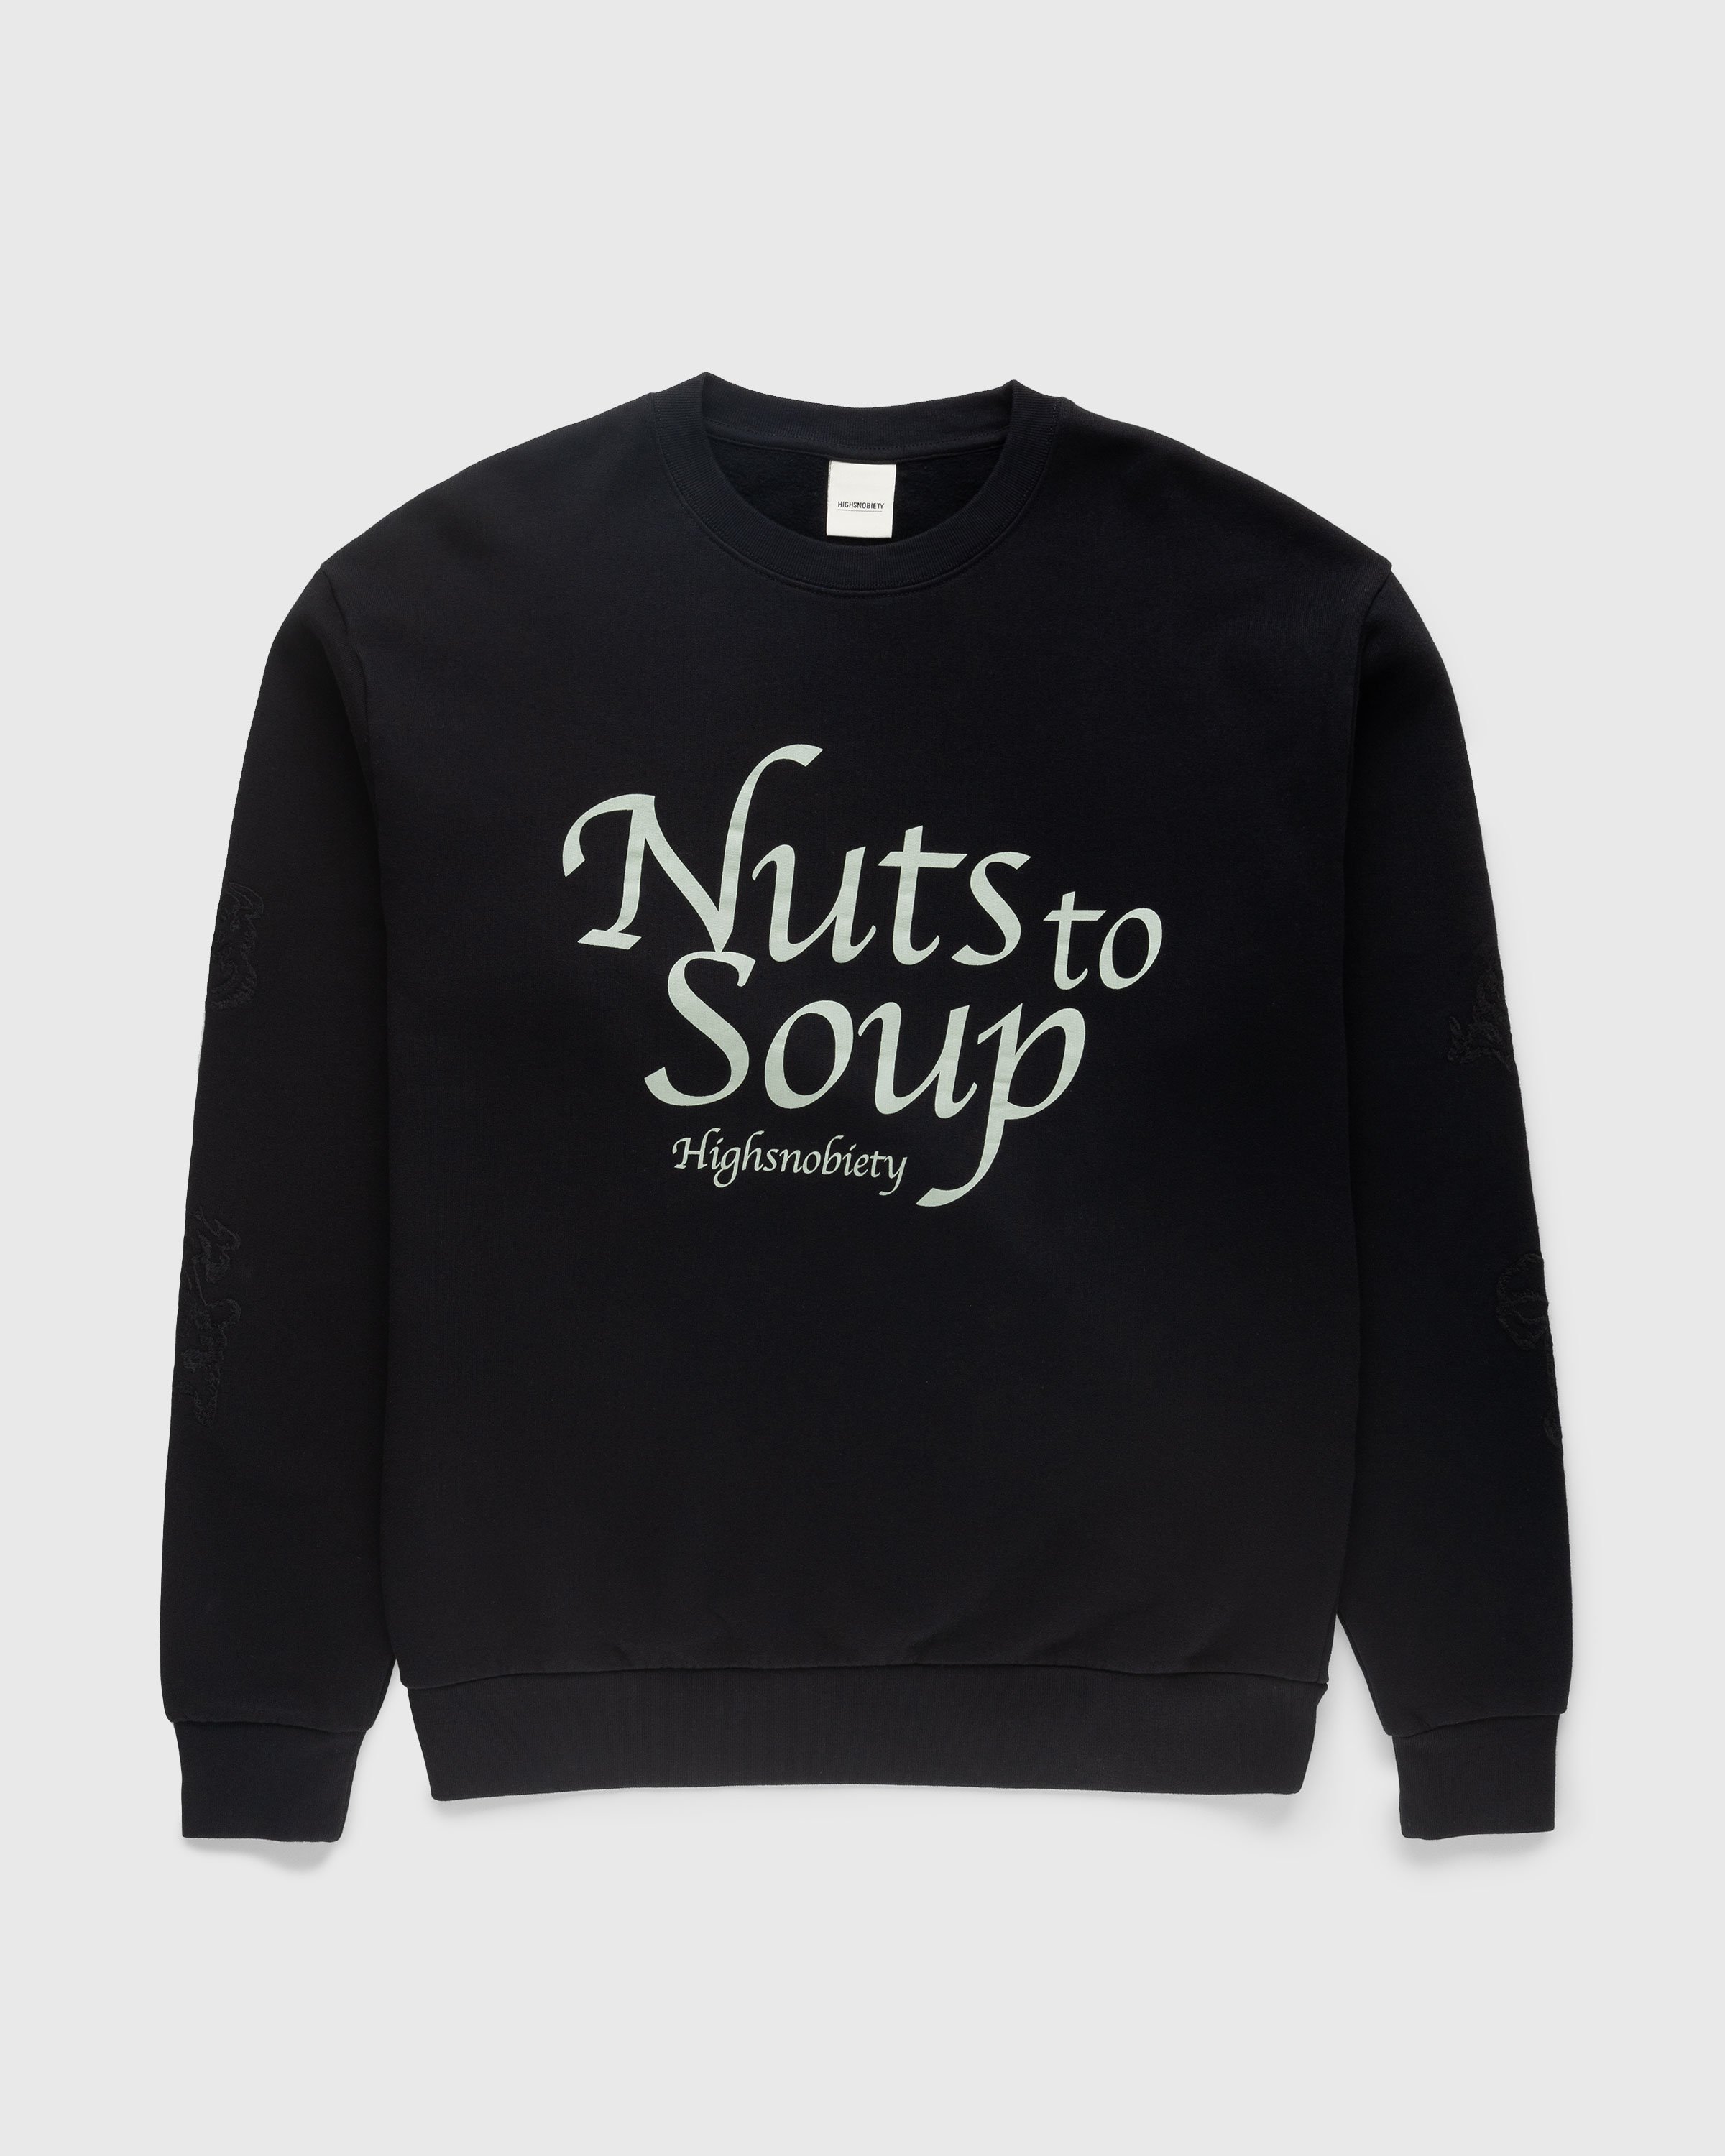 NTS x Highsnobiety - Nuts To Soup Crewneck Black - Clothing - Black - Image 1